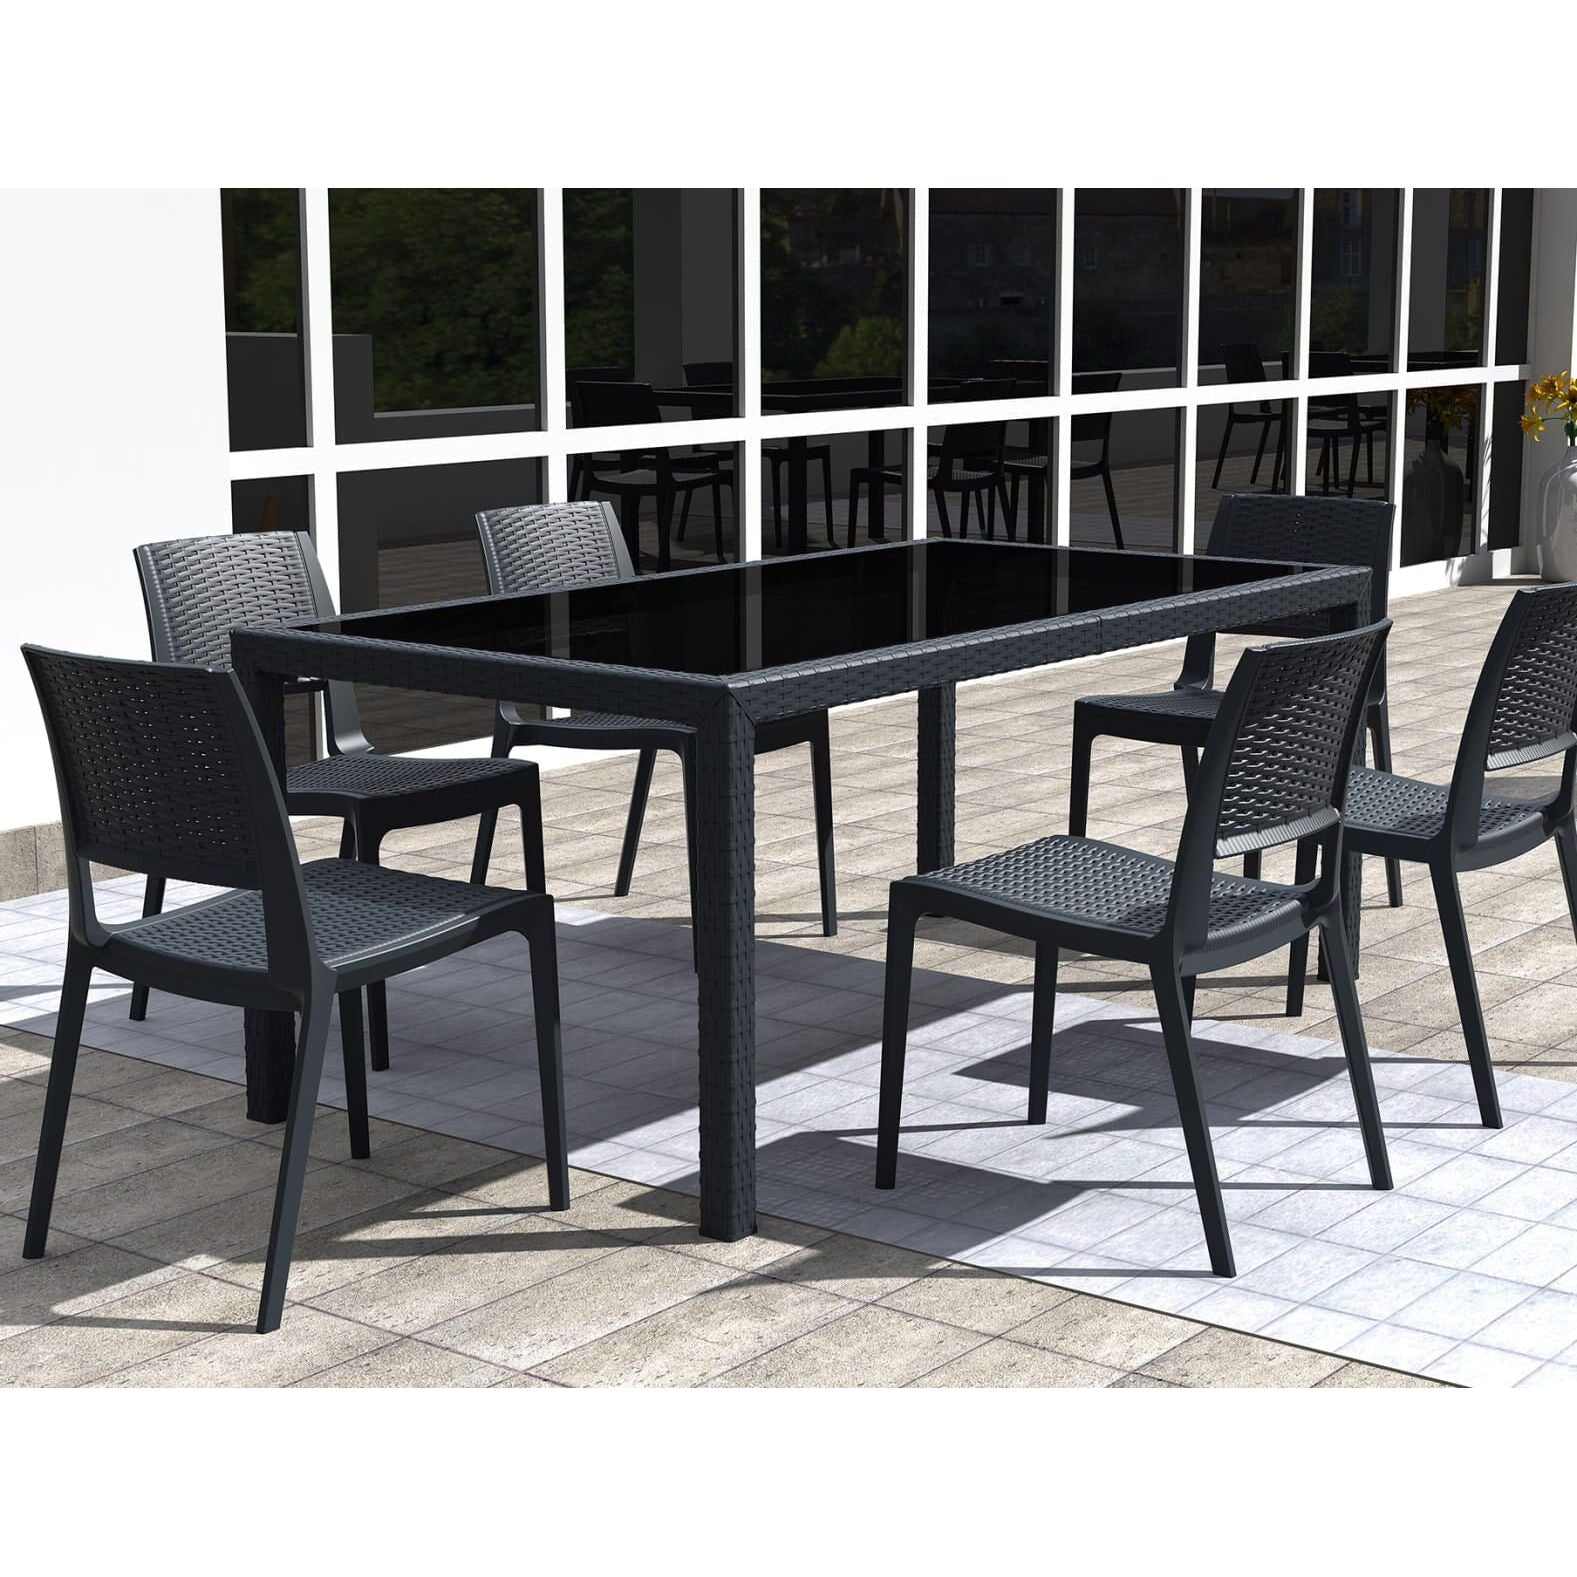 Garbar Pacific rectangular table indoors, outdoors 180x90